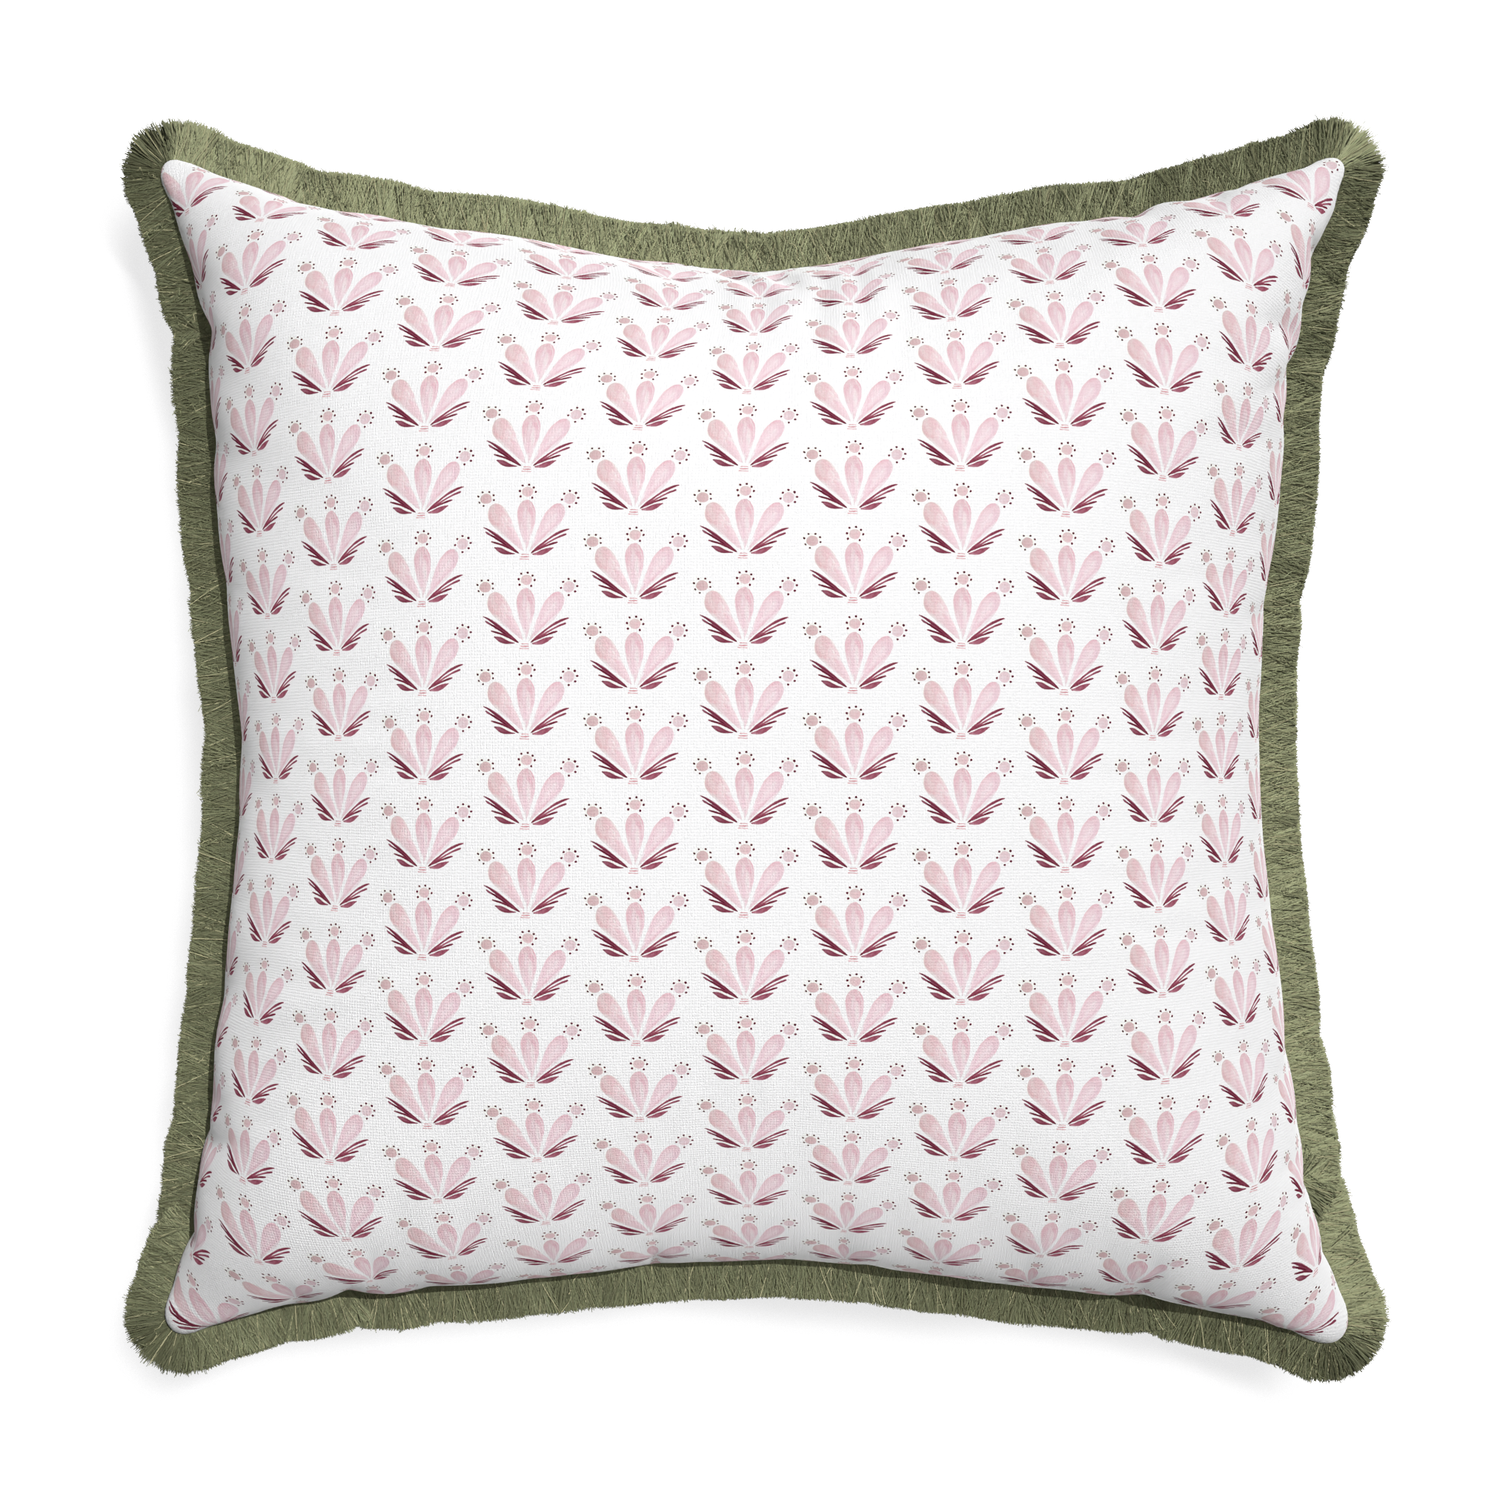 Euro-sham serena pink custom pillow with sage fringe on white background